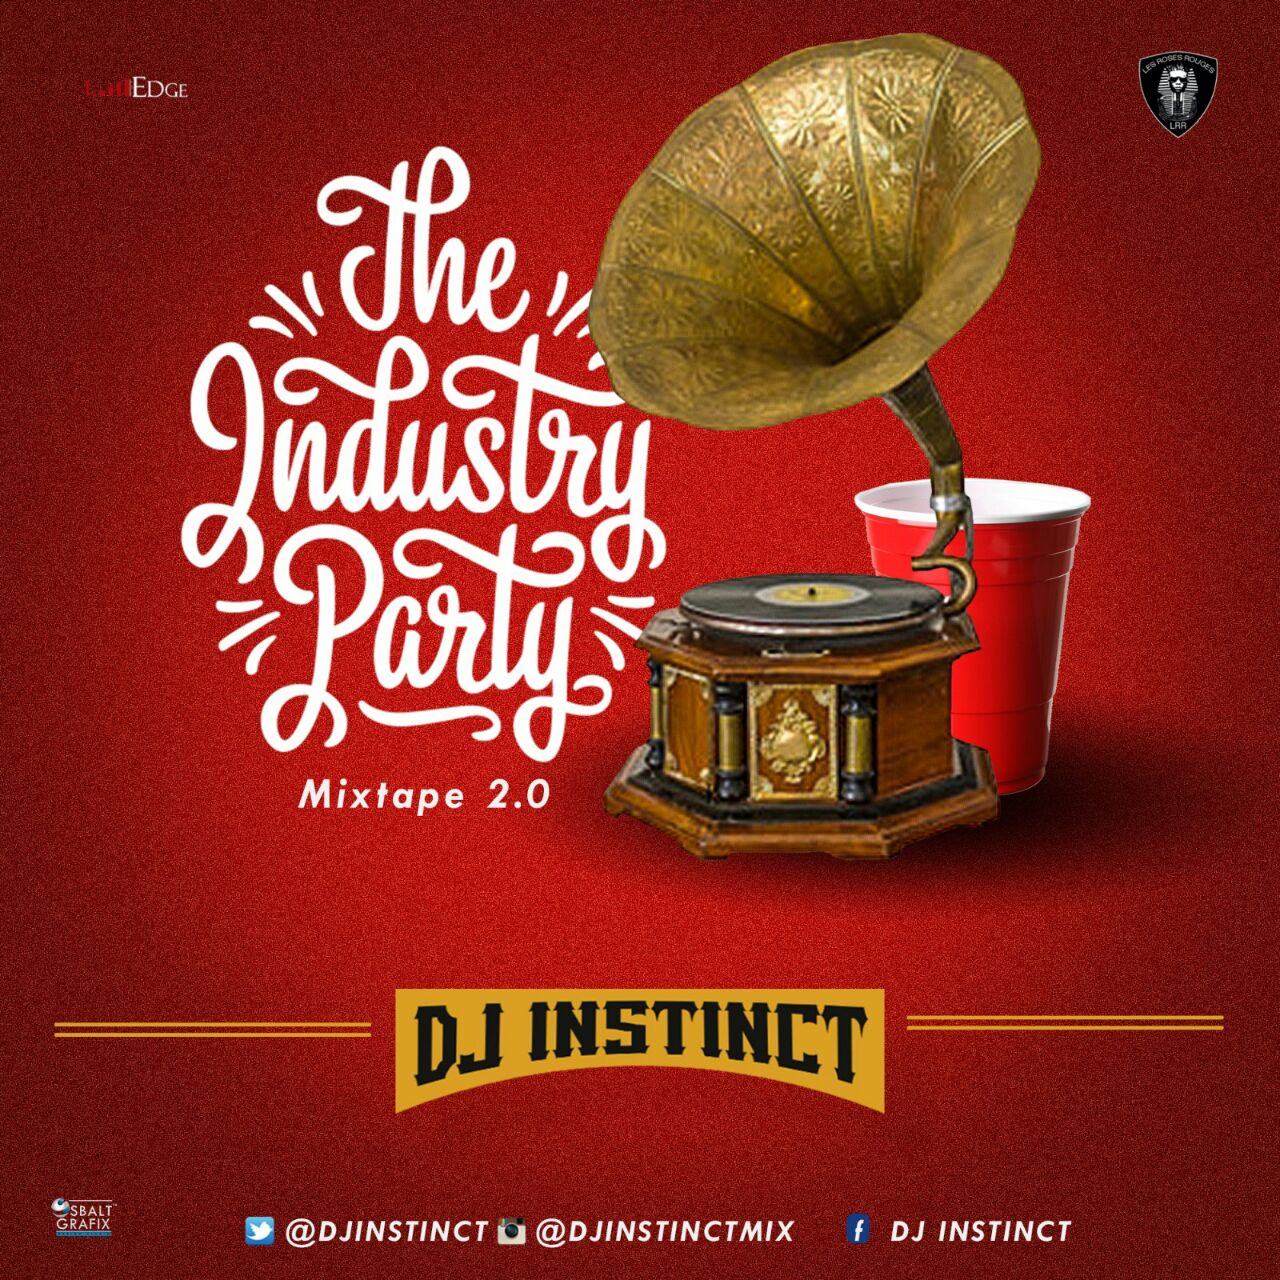 Dj Instinct - The Industry Party 2.0 [MixTape]